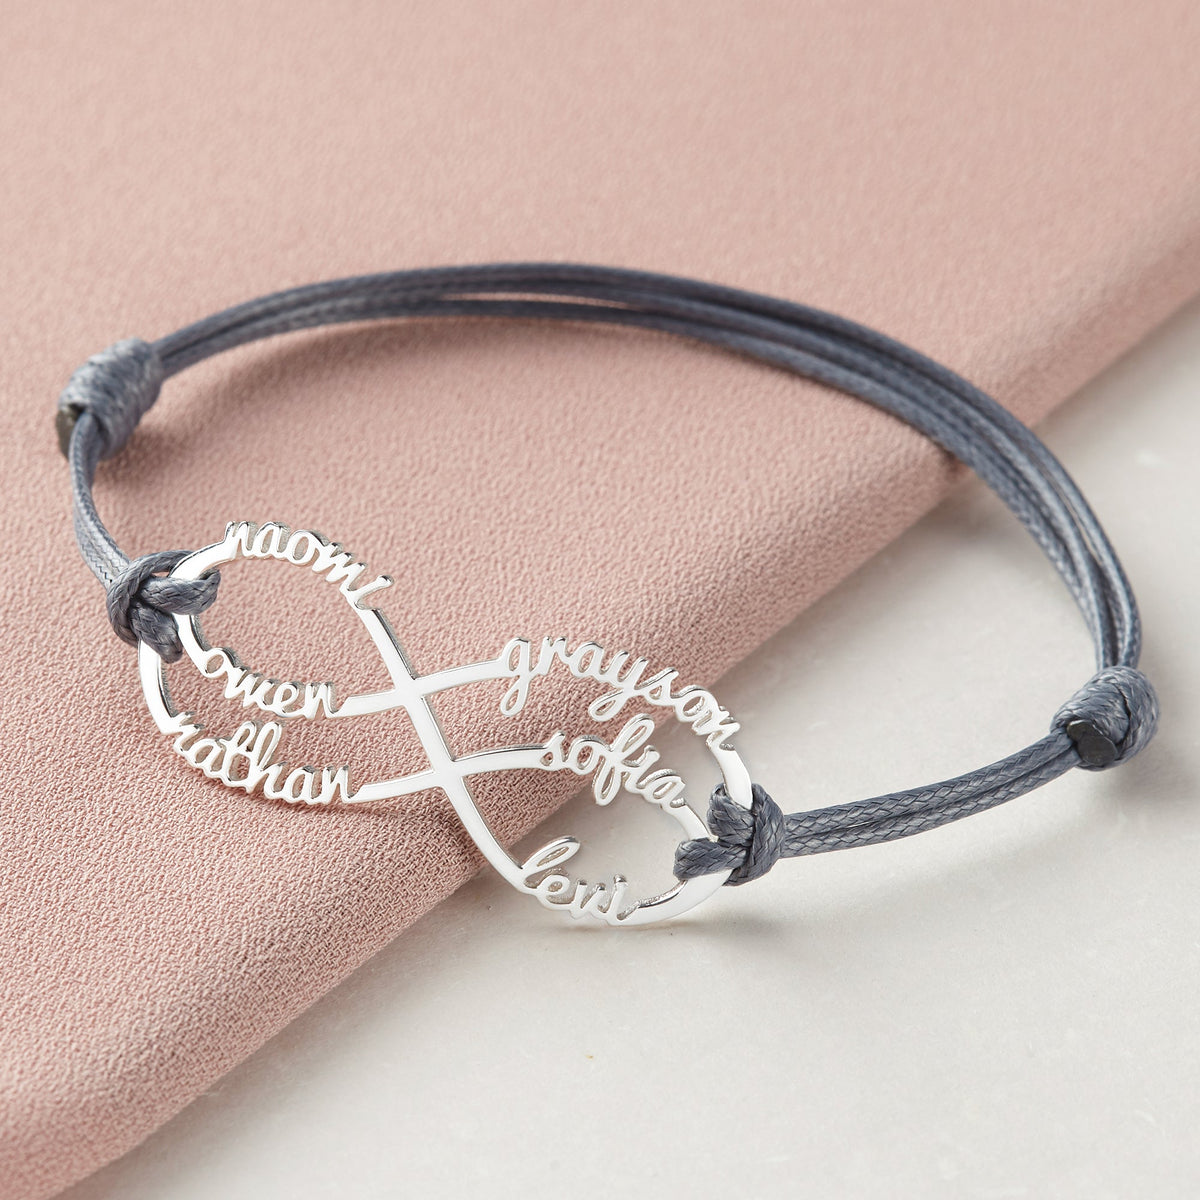 Amazon.com: Children's Name Engraved Bracelet - 925 Sterling Silver Chain  Bracelet - Personalized Name Bracelet - Birthday Gift for Mom, Gift Wrapped Names  bracelet : Handmade Products